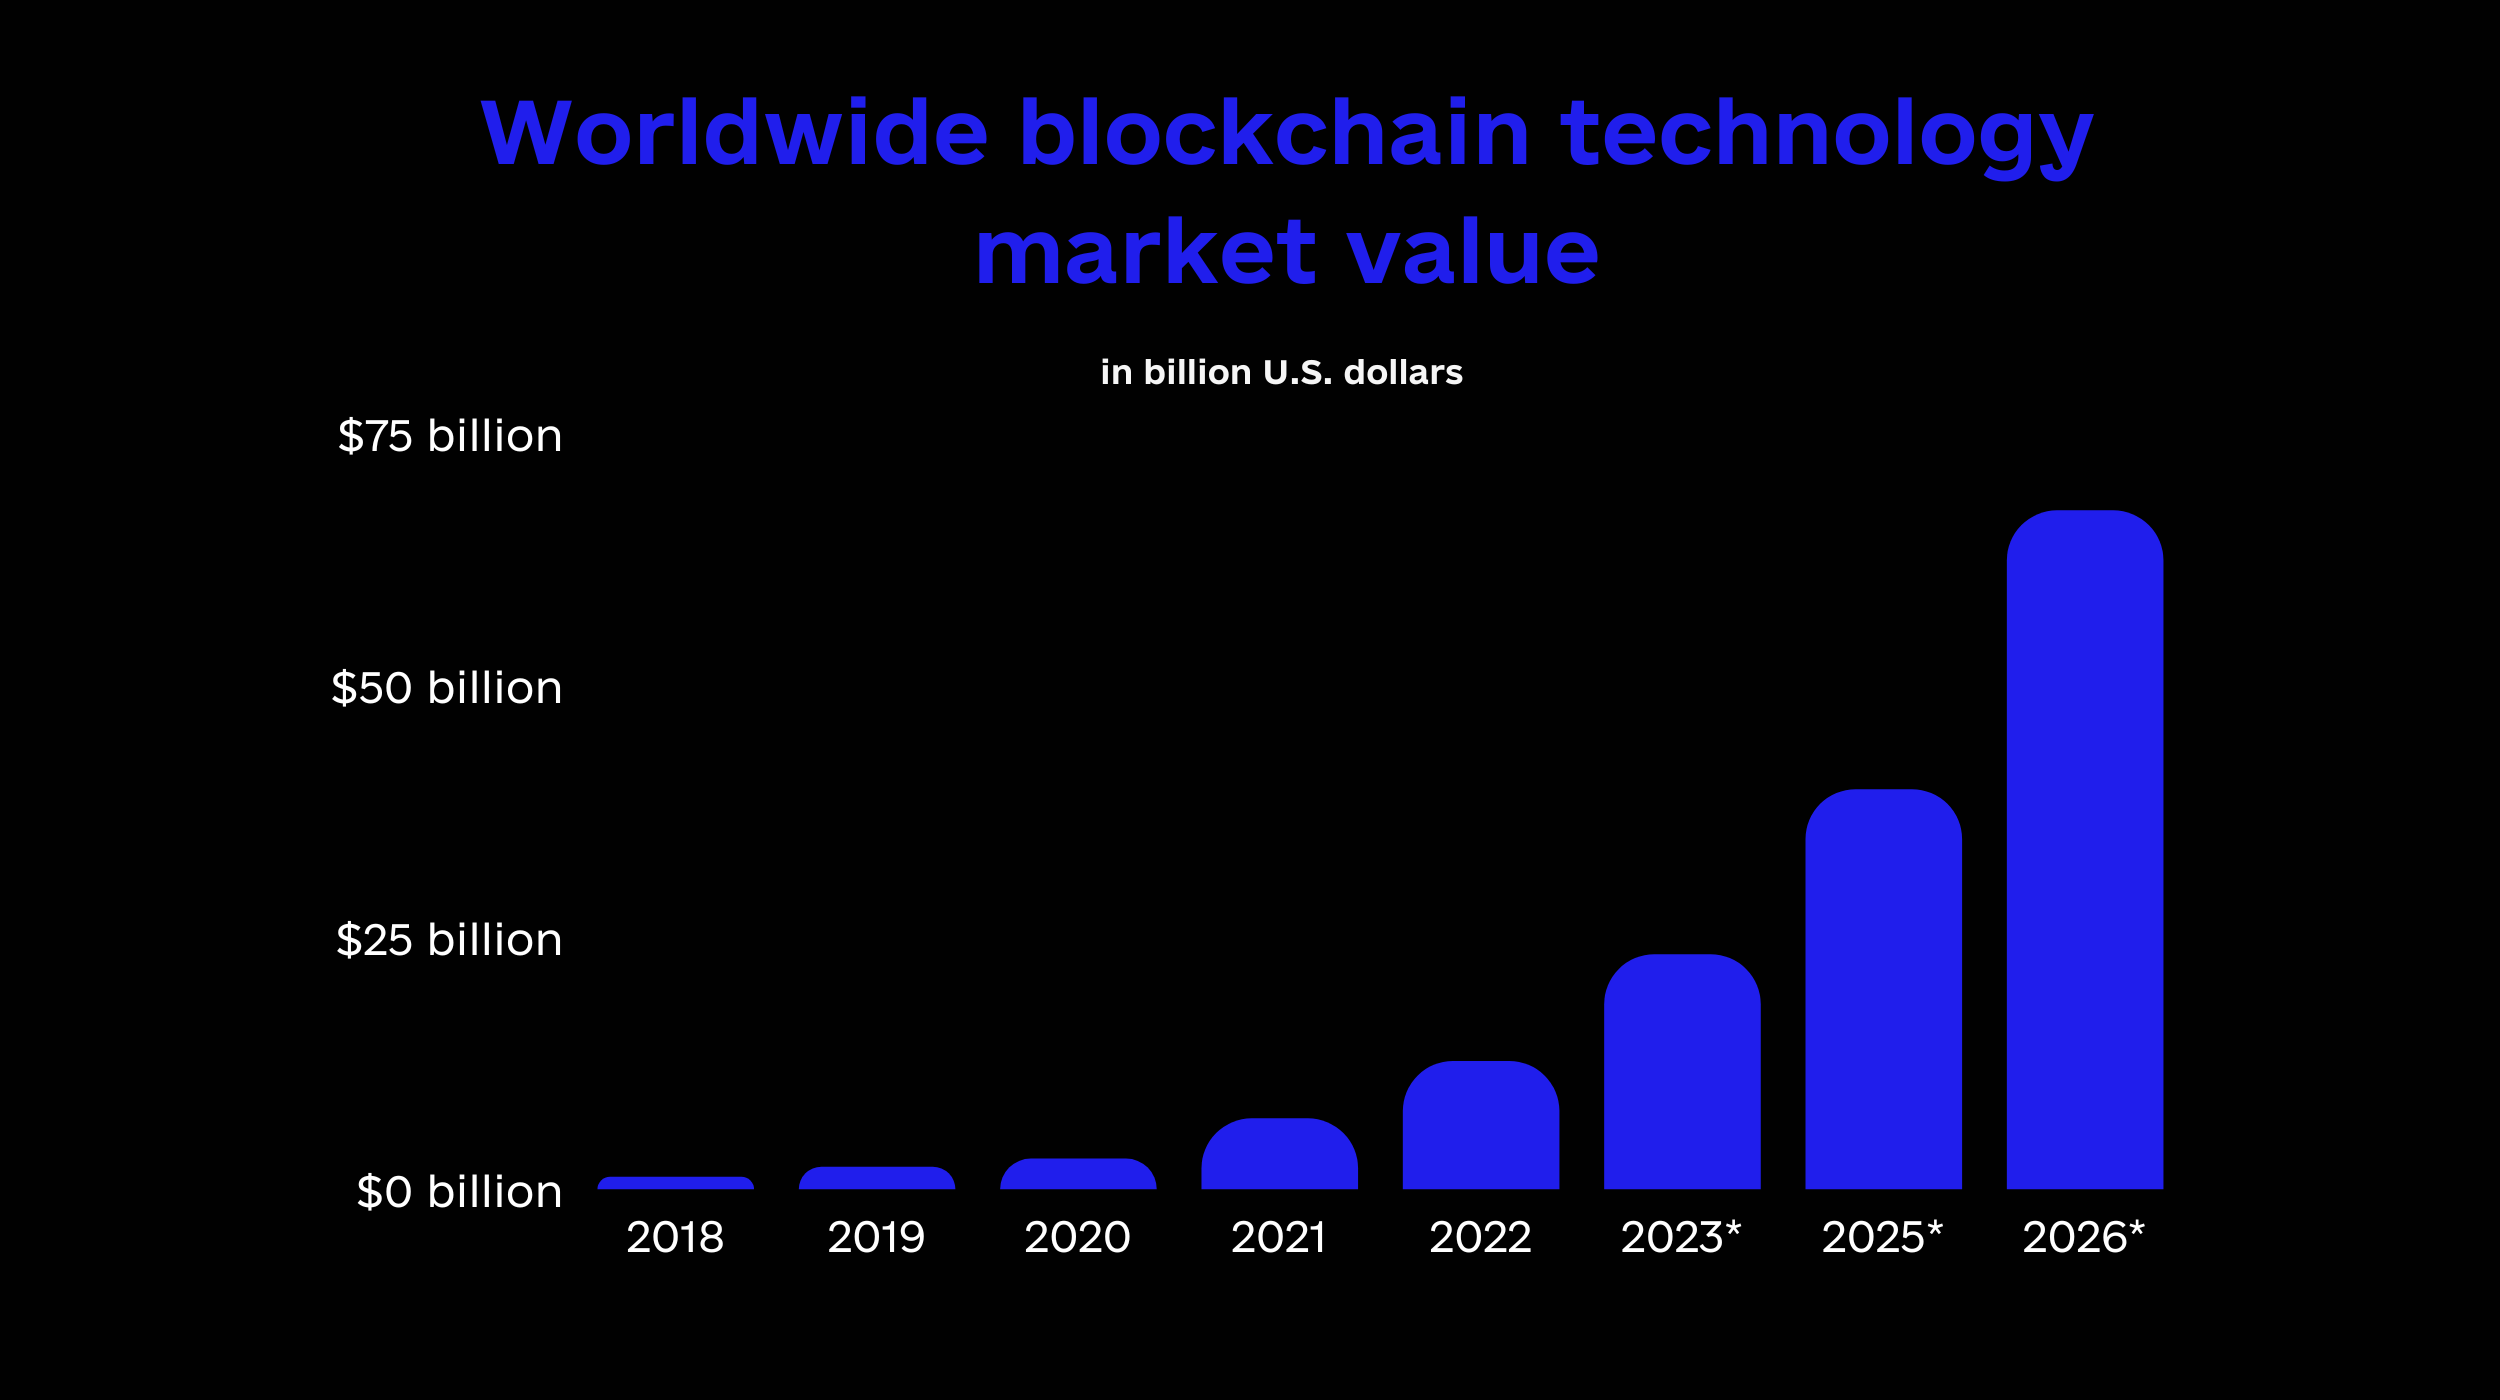 Worldwide blockchain technology market value